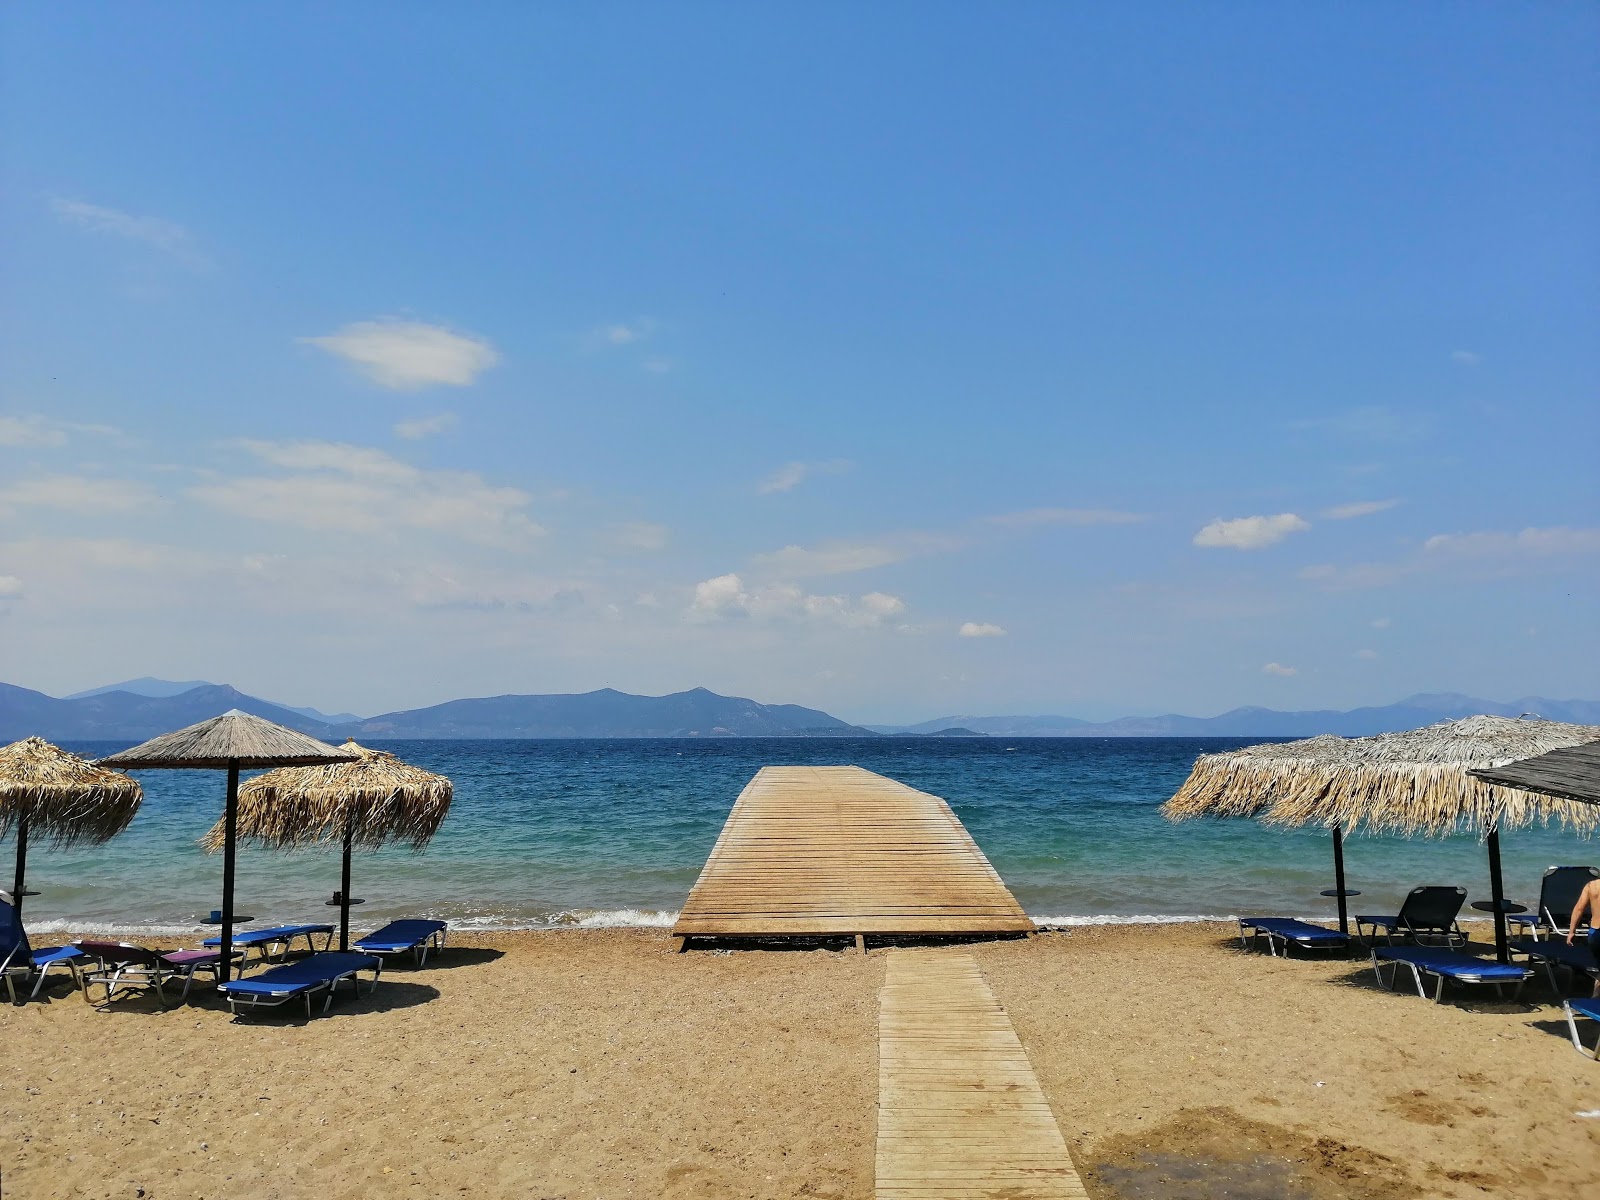 Foto af Neos Pirgos beach faciliteter område